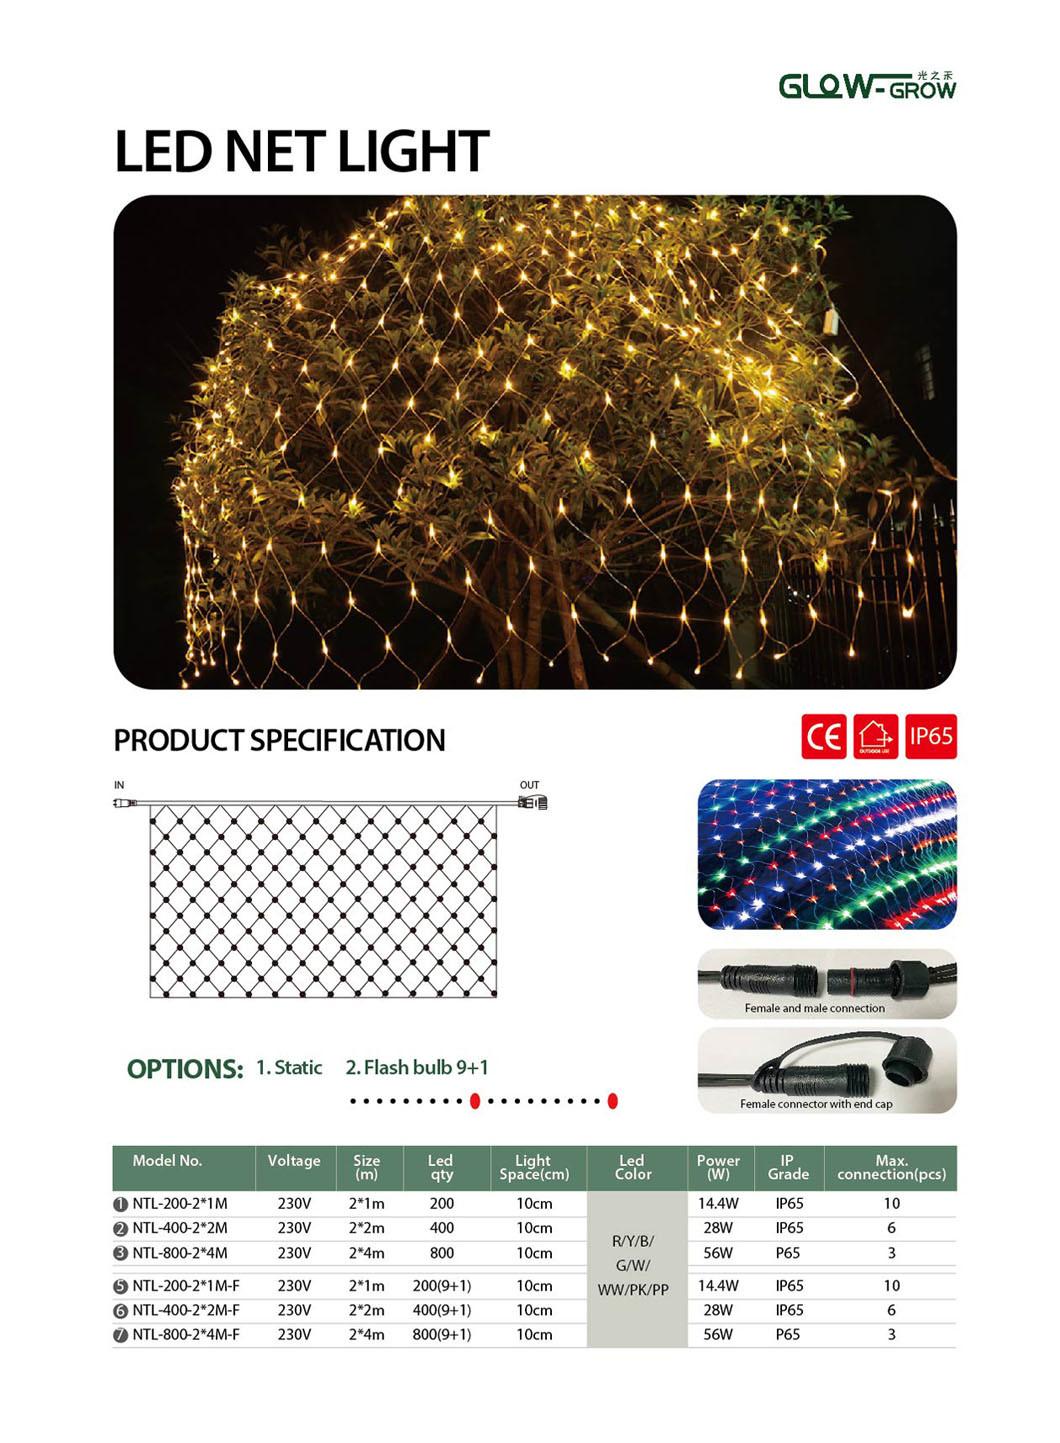 800 LED 56W Christmas Crystal Net Light for Fence Shrub Decoratin